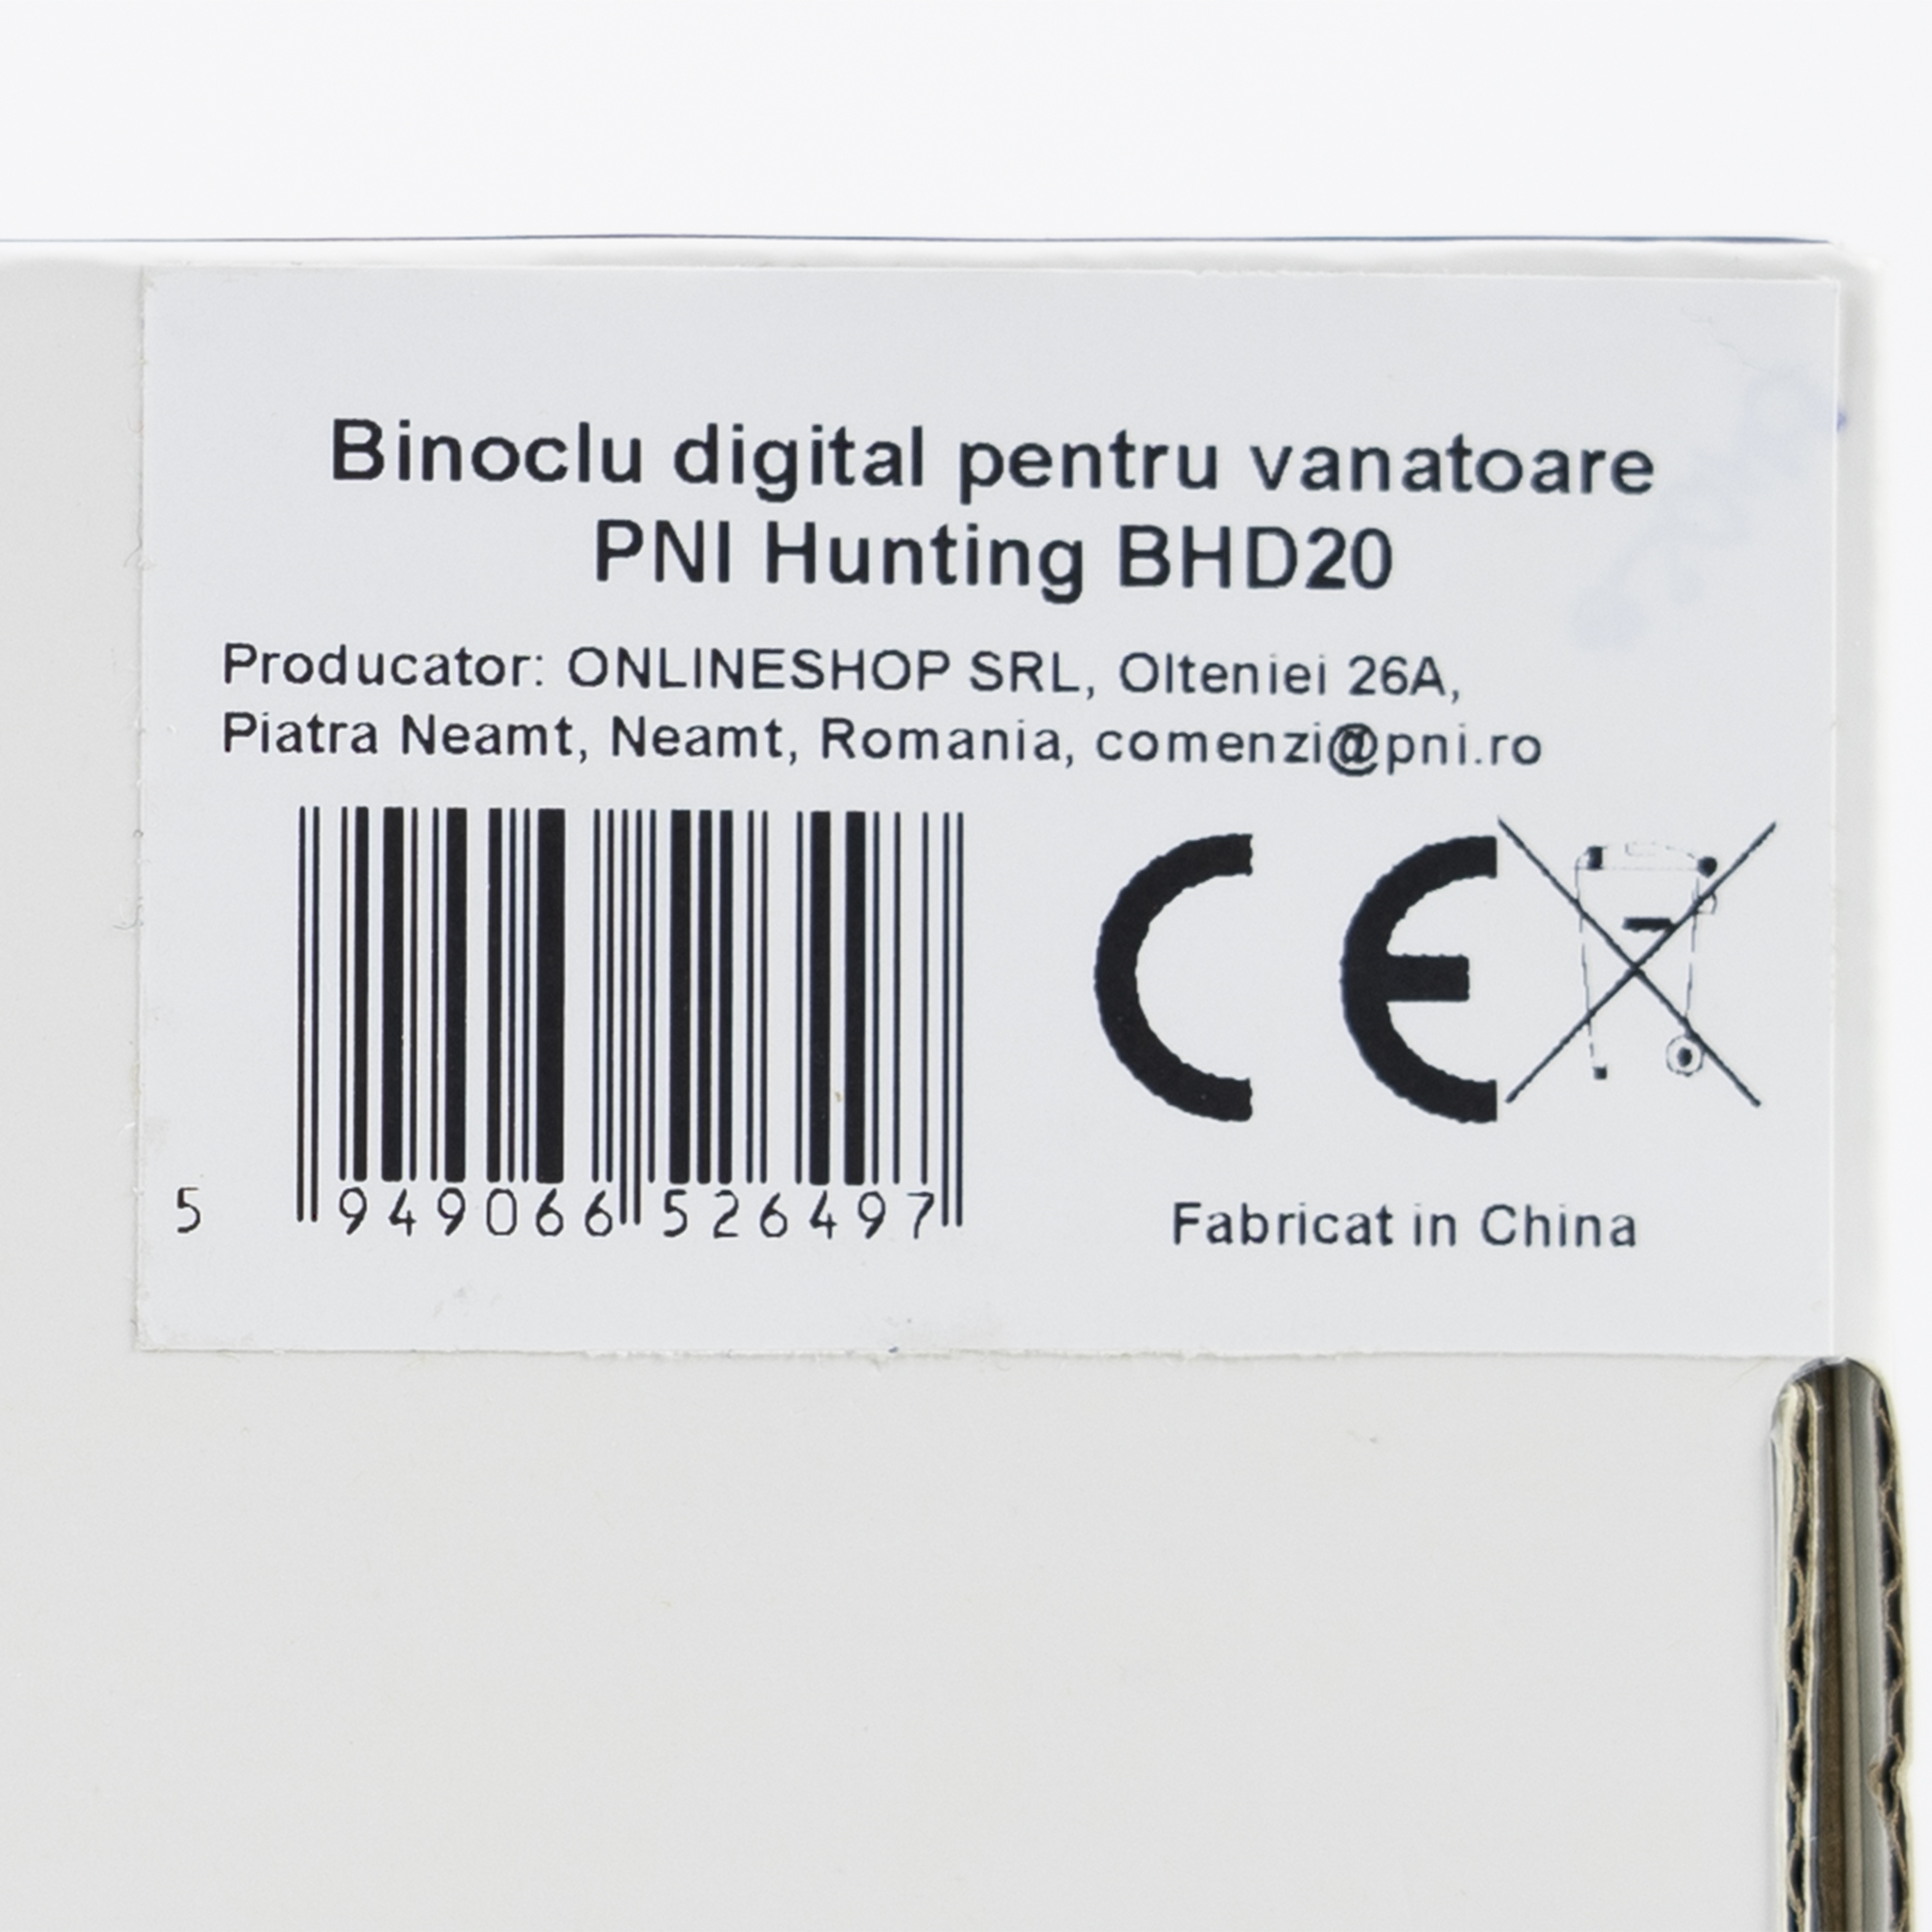 Binoclu digital pentru vanatoare PNI Hunting BHD20, 5MP, zoom 4x, display 2.0 inch, acumulator inclus image14